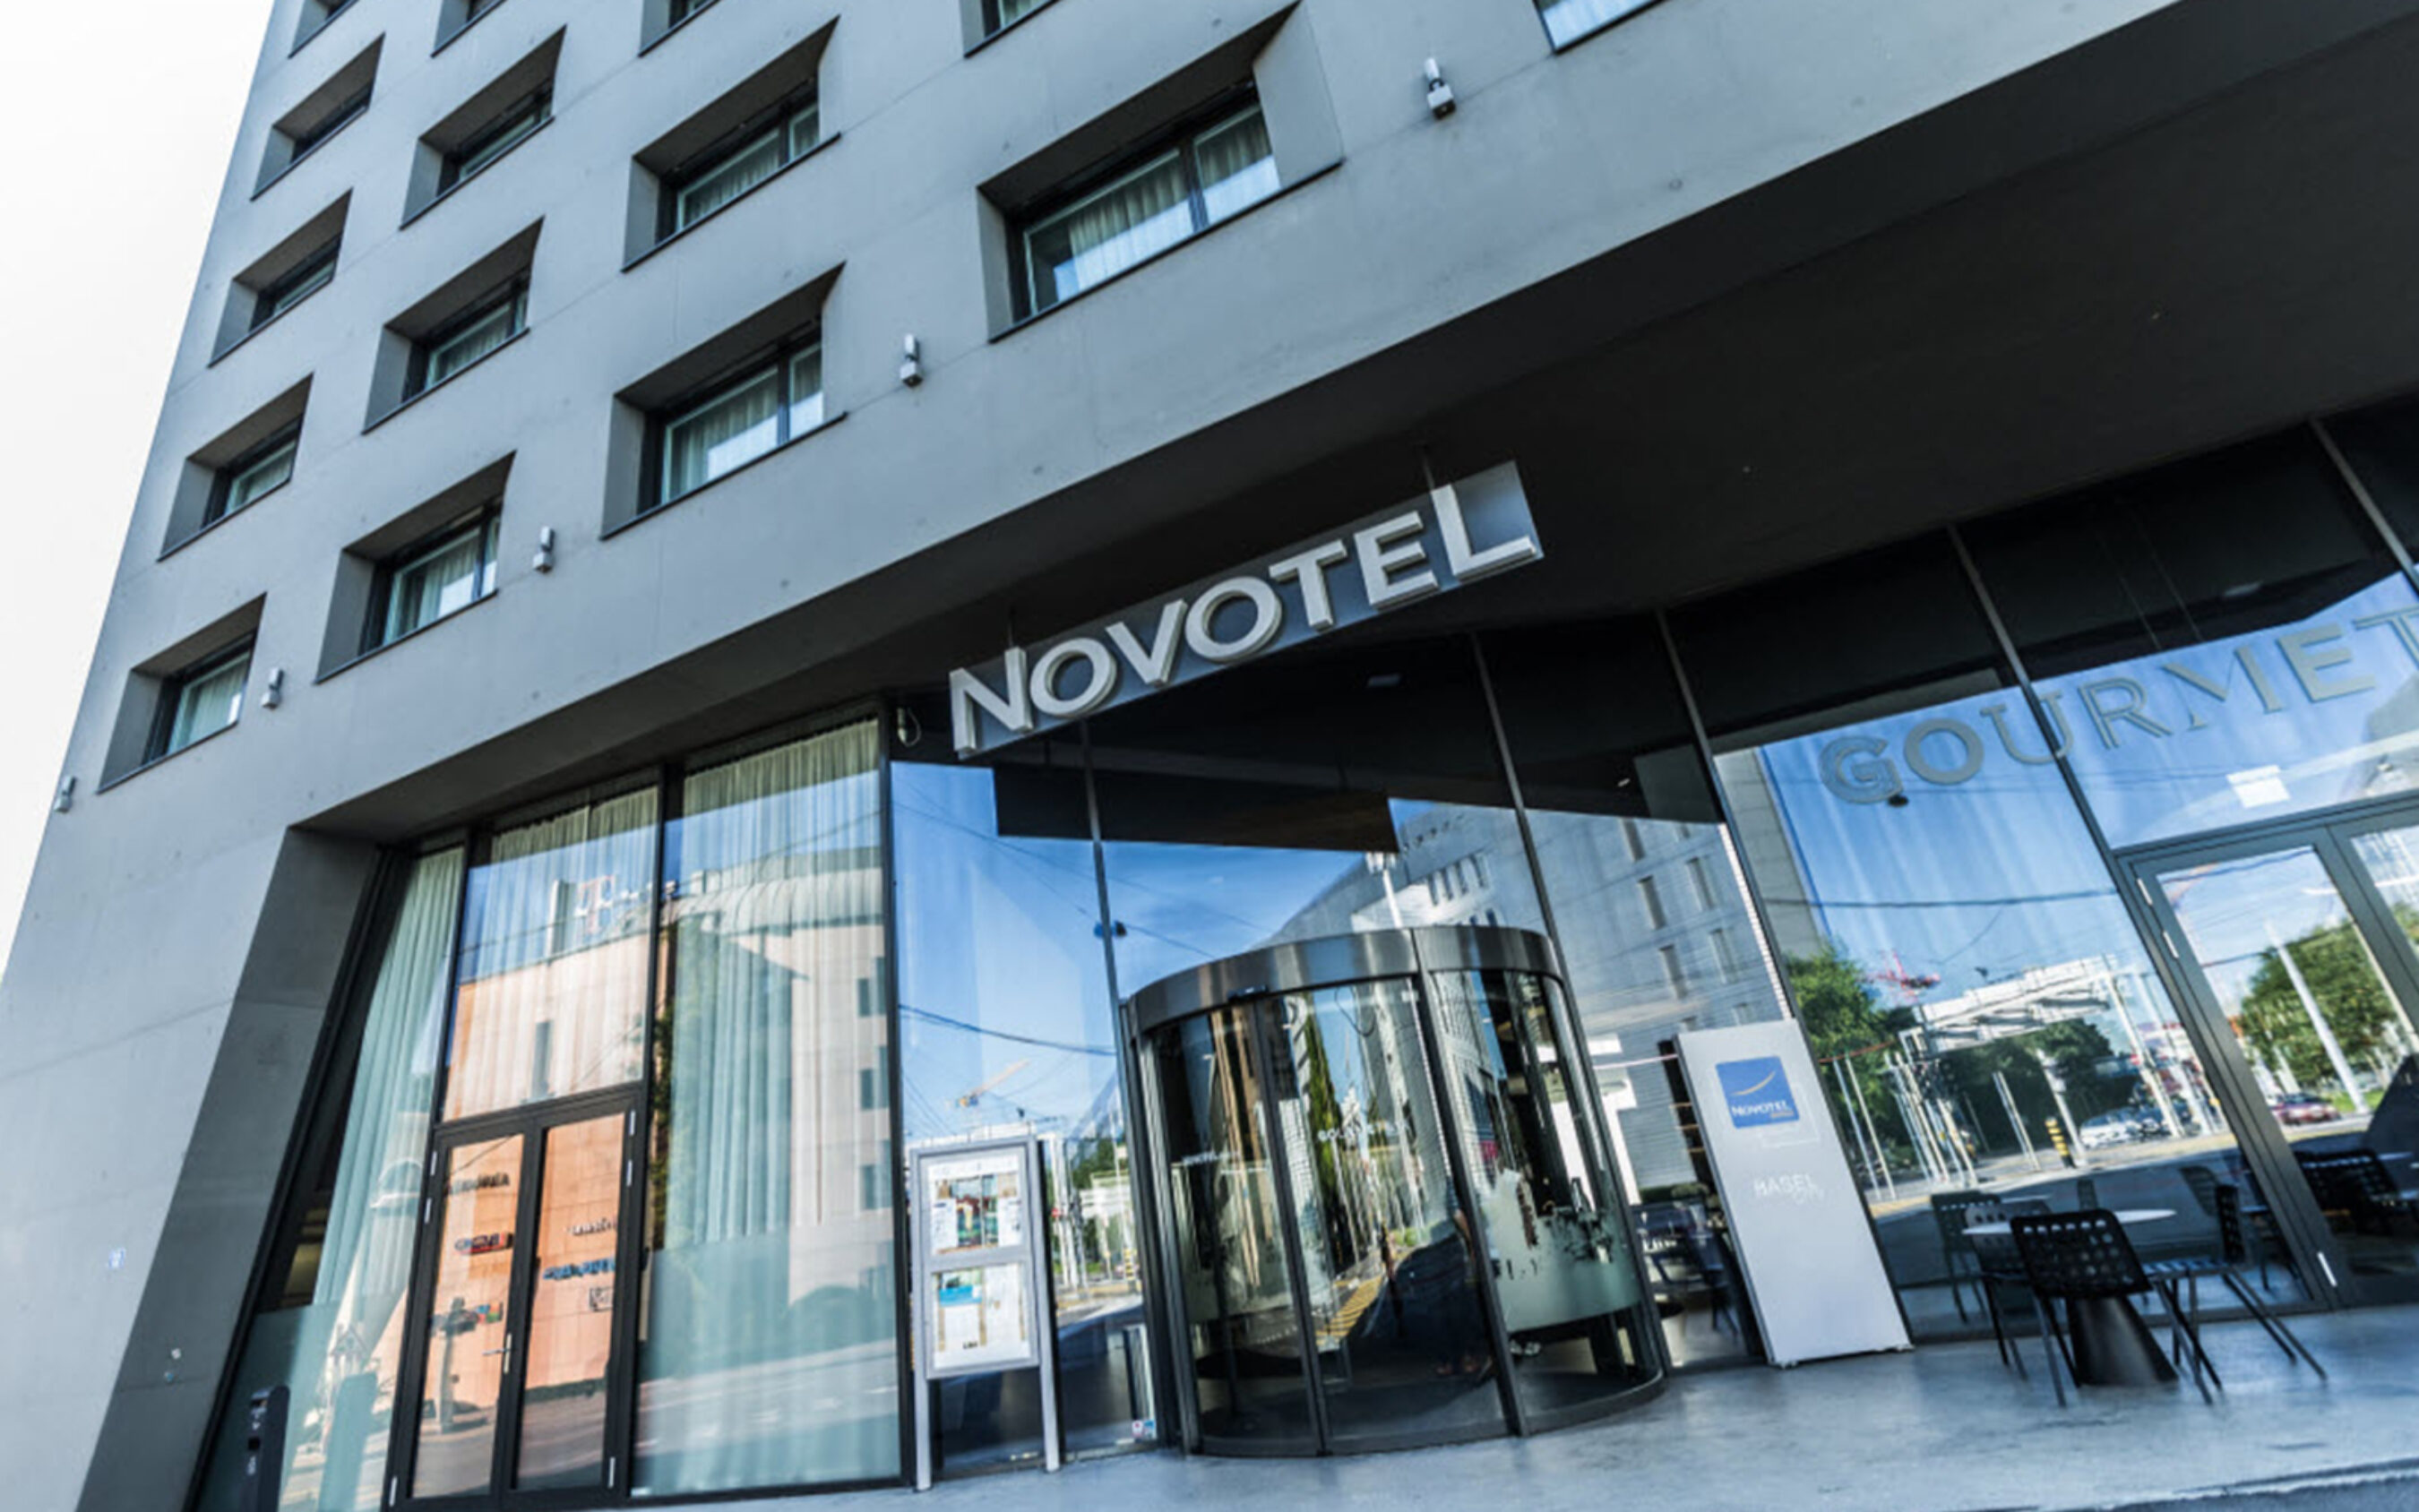 Basel novotel basel city hotelbooker 01